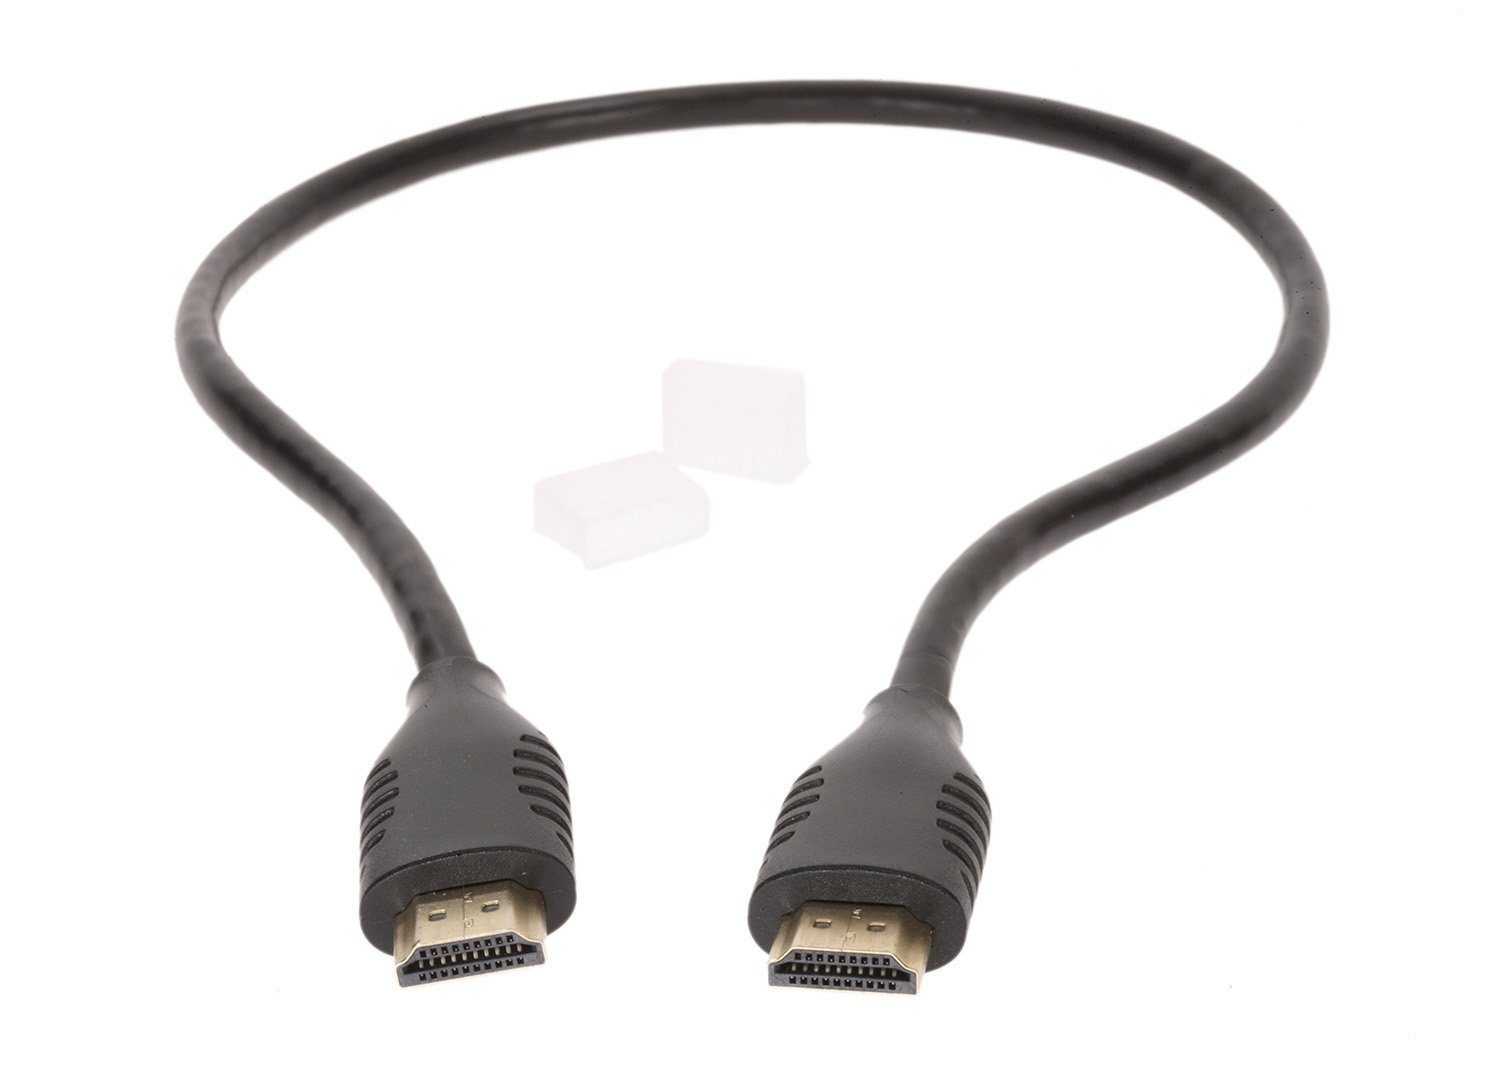 Typ Ethernet valonic HD, HDMI Full Kabel, valonic HDMI cm), HDMI 50cm HDMI A, A Typ (50 HDMI-Kabel, kurz, -